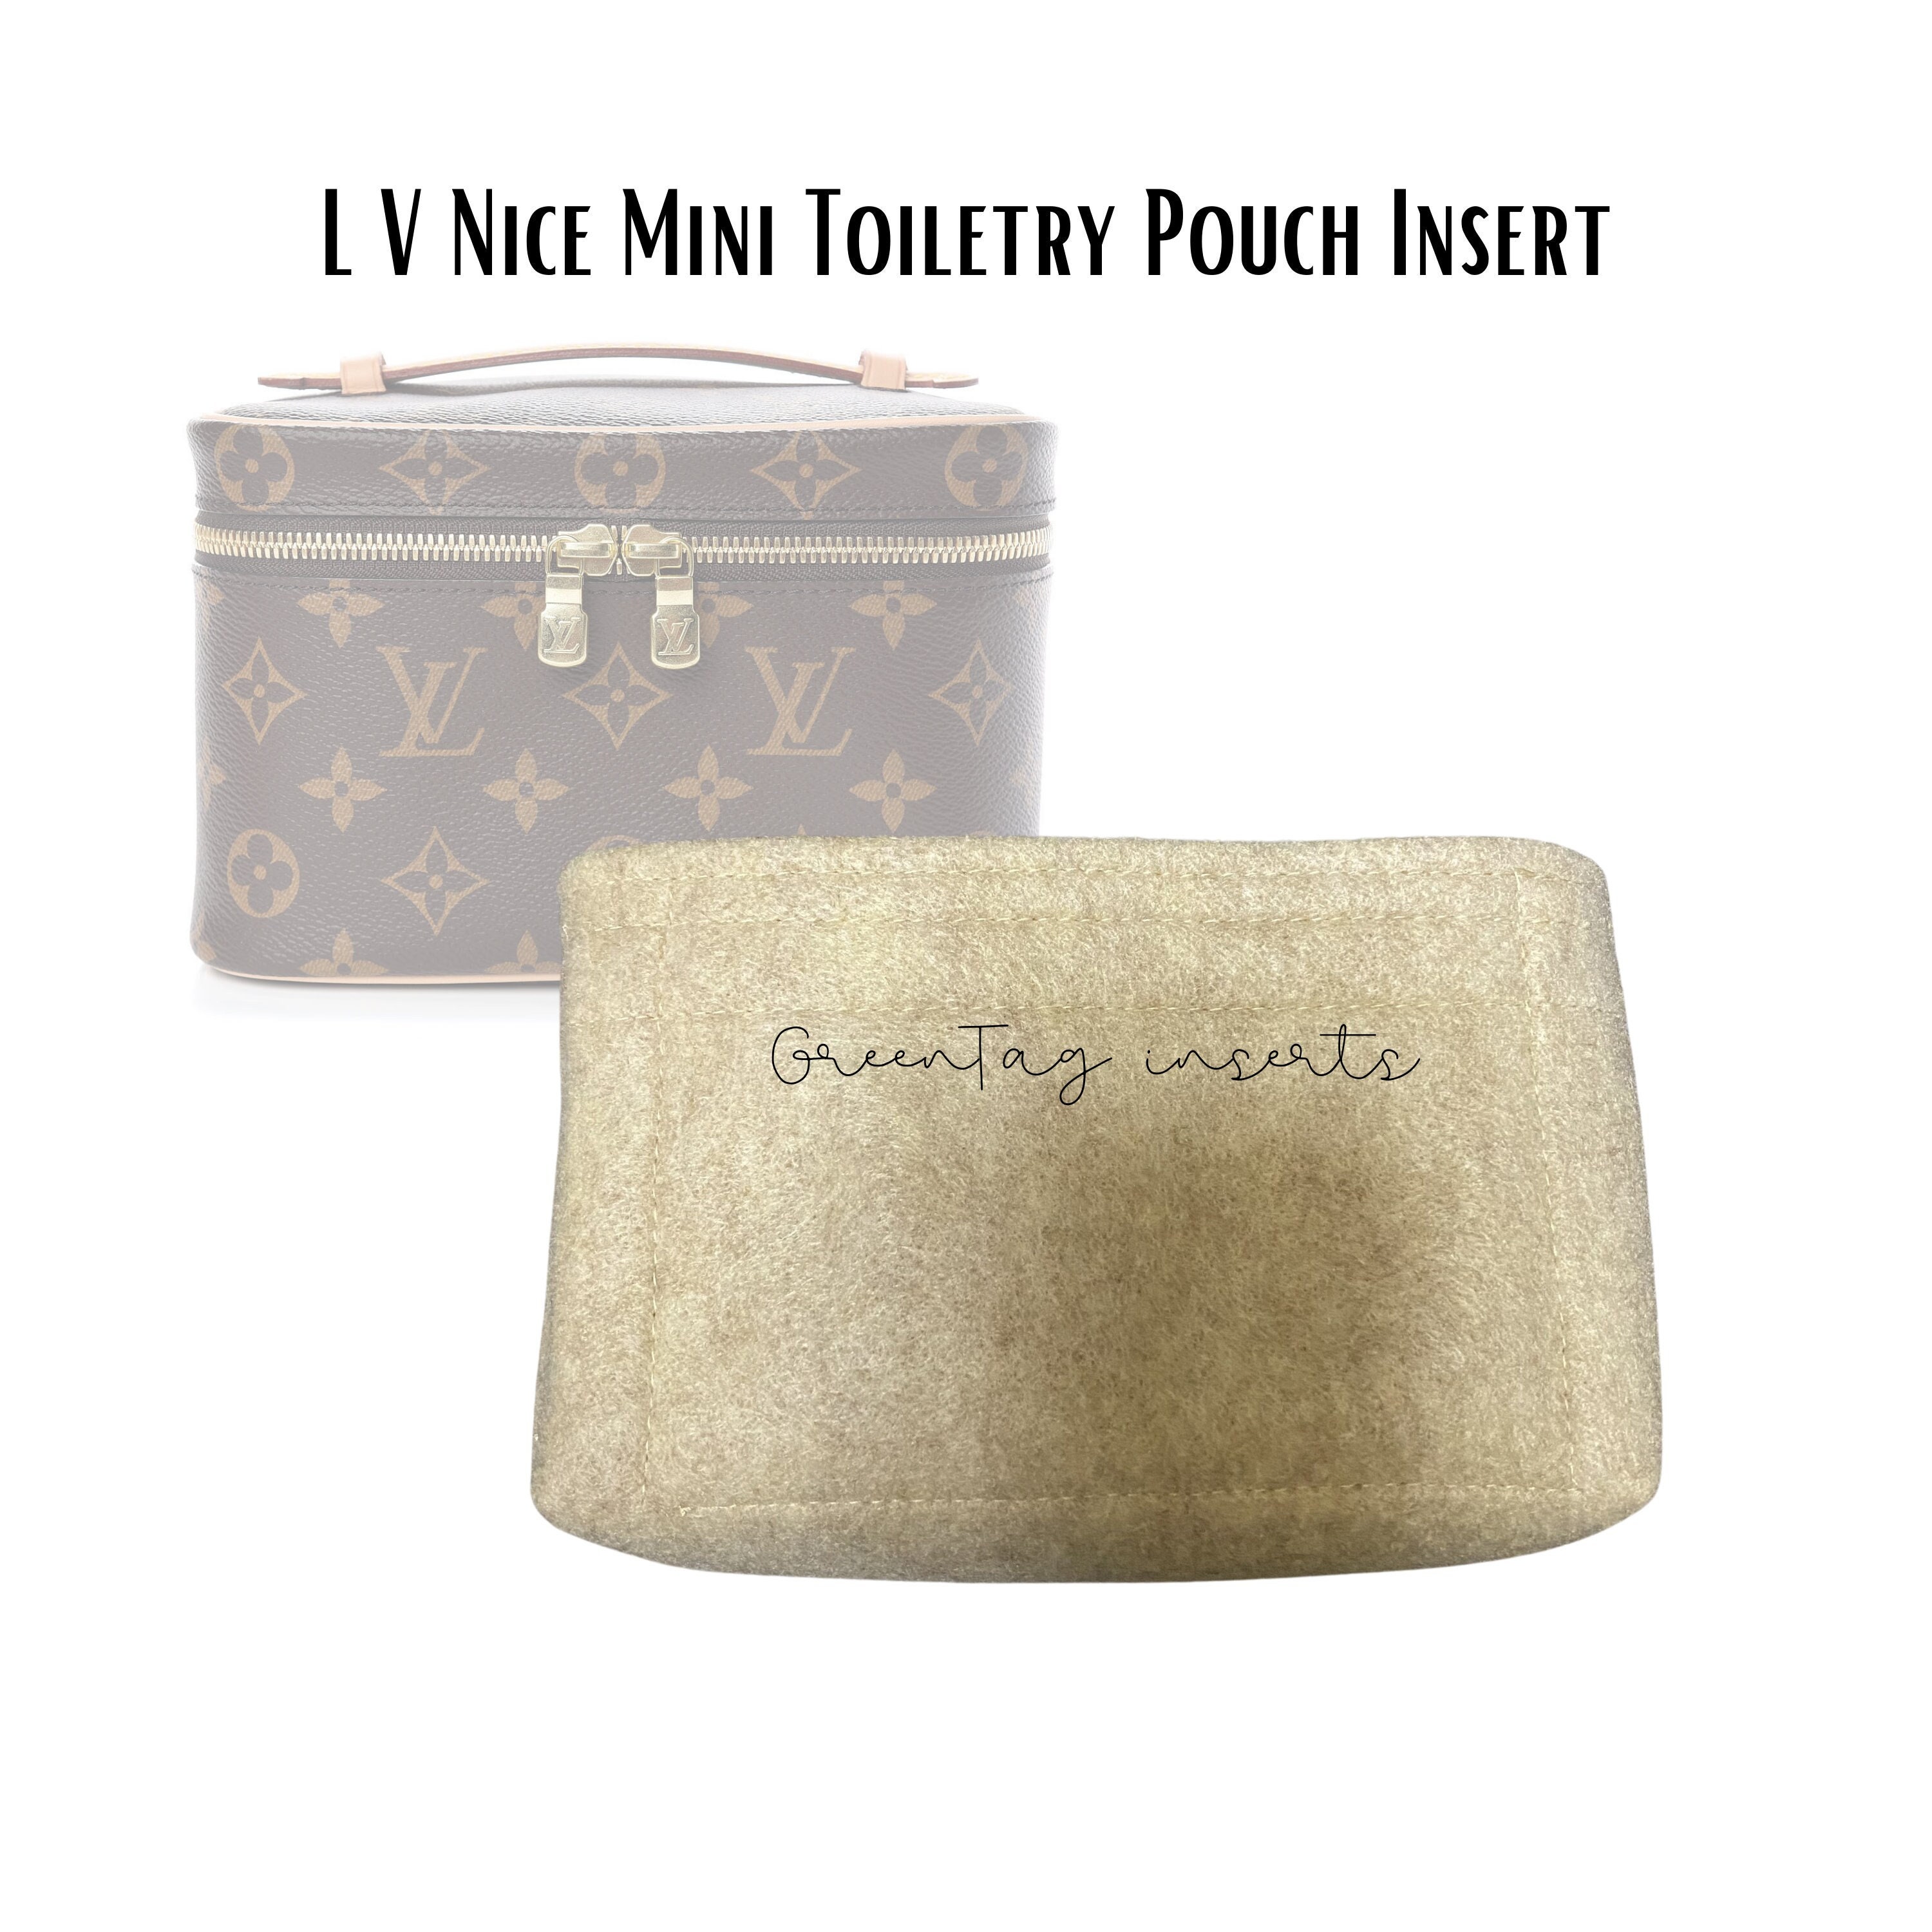 Felt Insert Organizer for L V Nice Mini Toiletry Pouch Vanity -   Australia